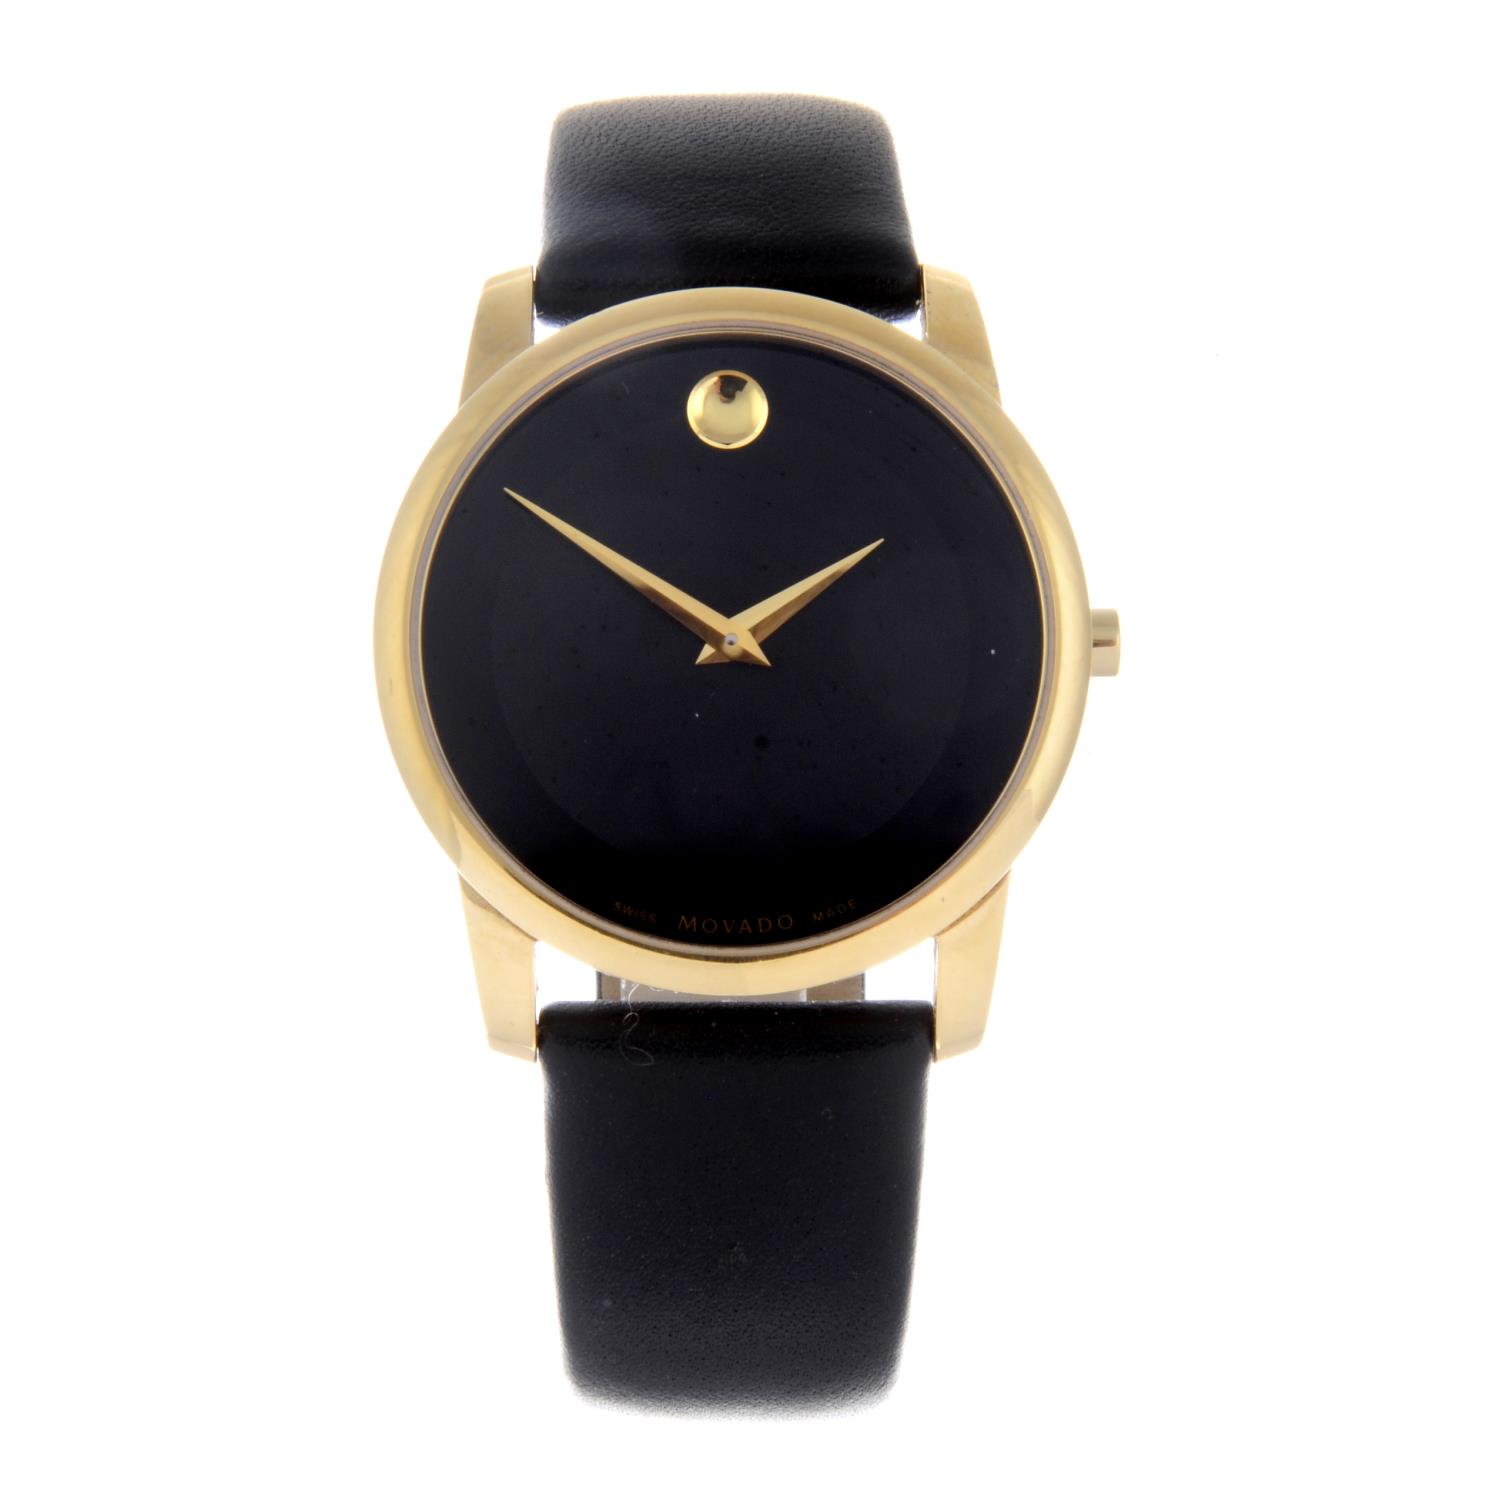 MOVADO - a gentleman's Museum wrist watch.